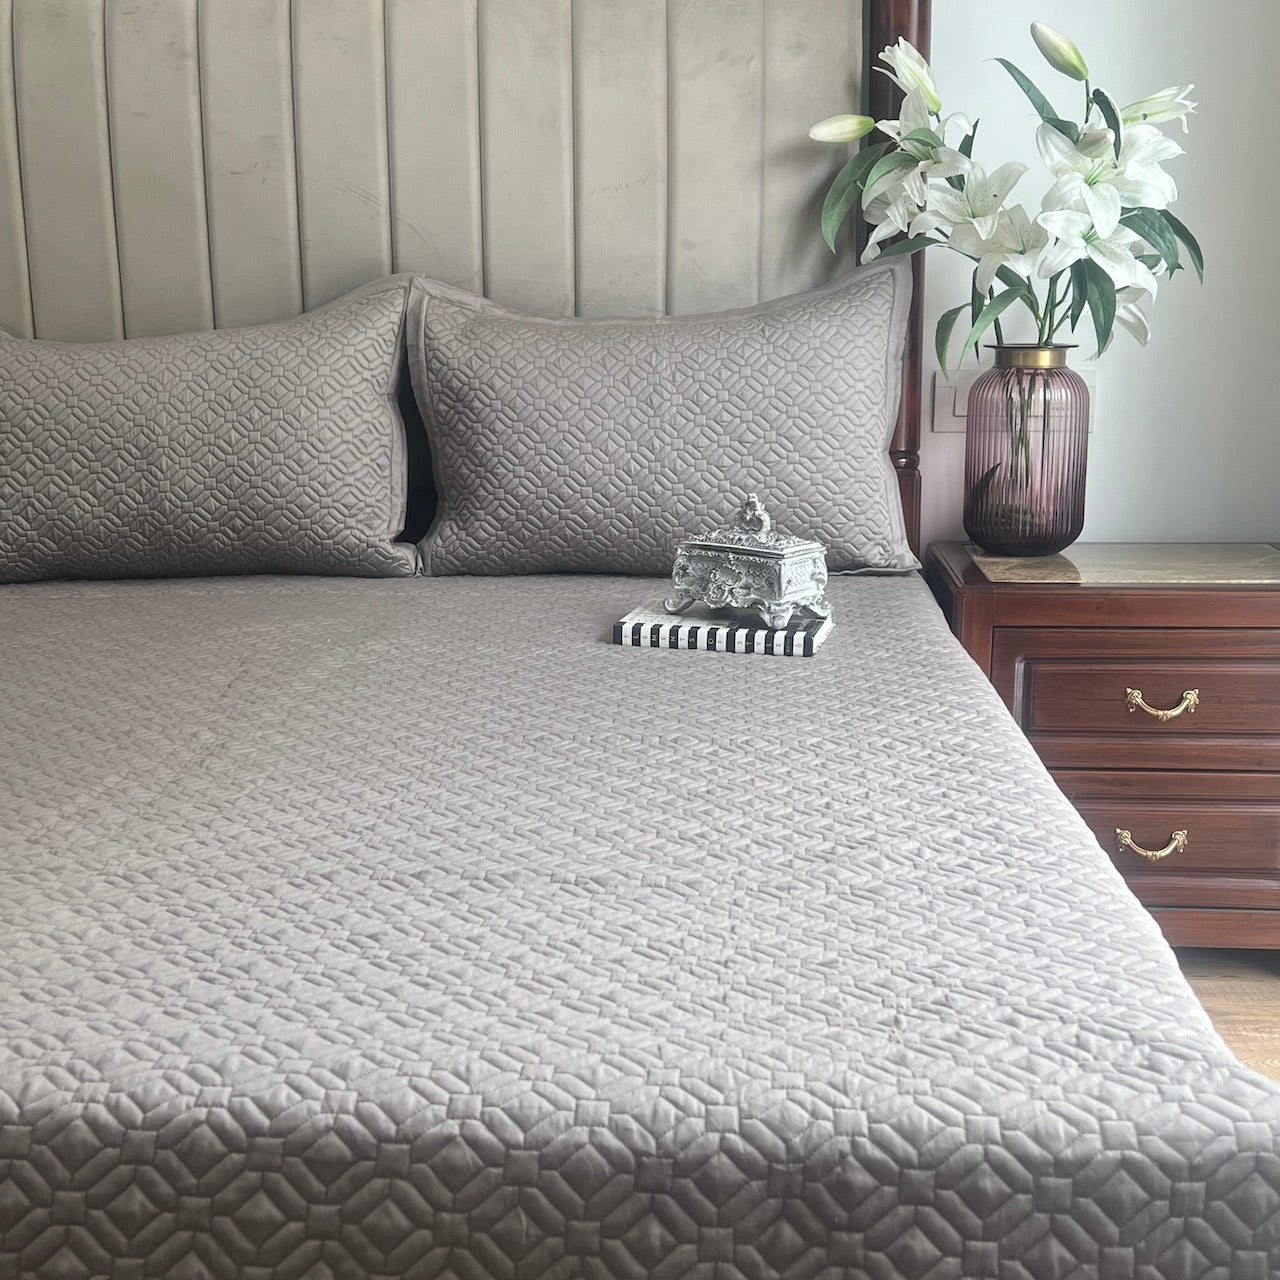 Tulum Olive Grey Cotton Reversible Bedspread